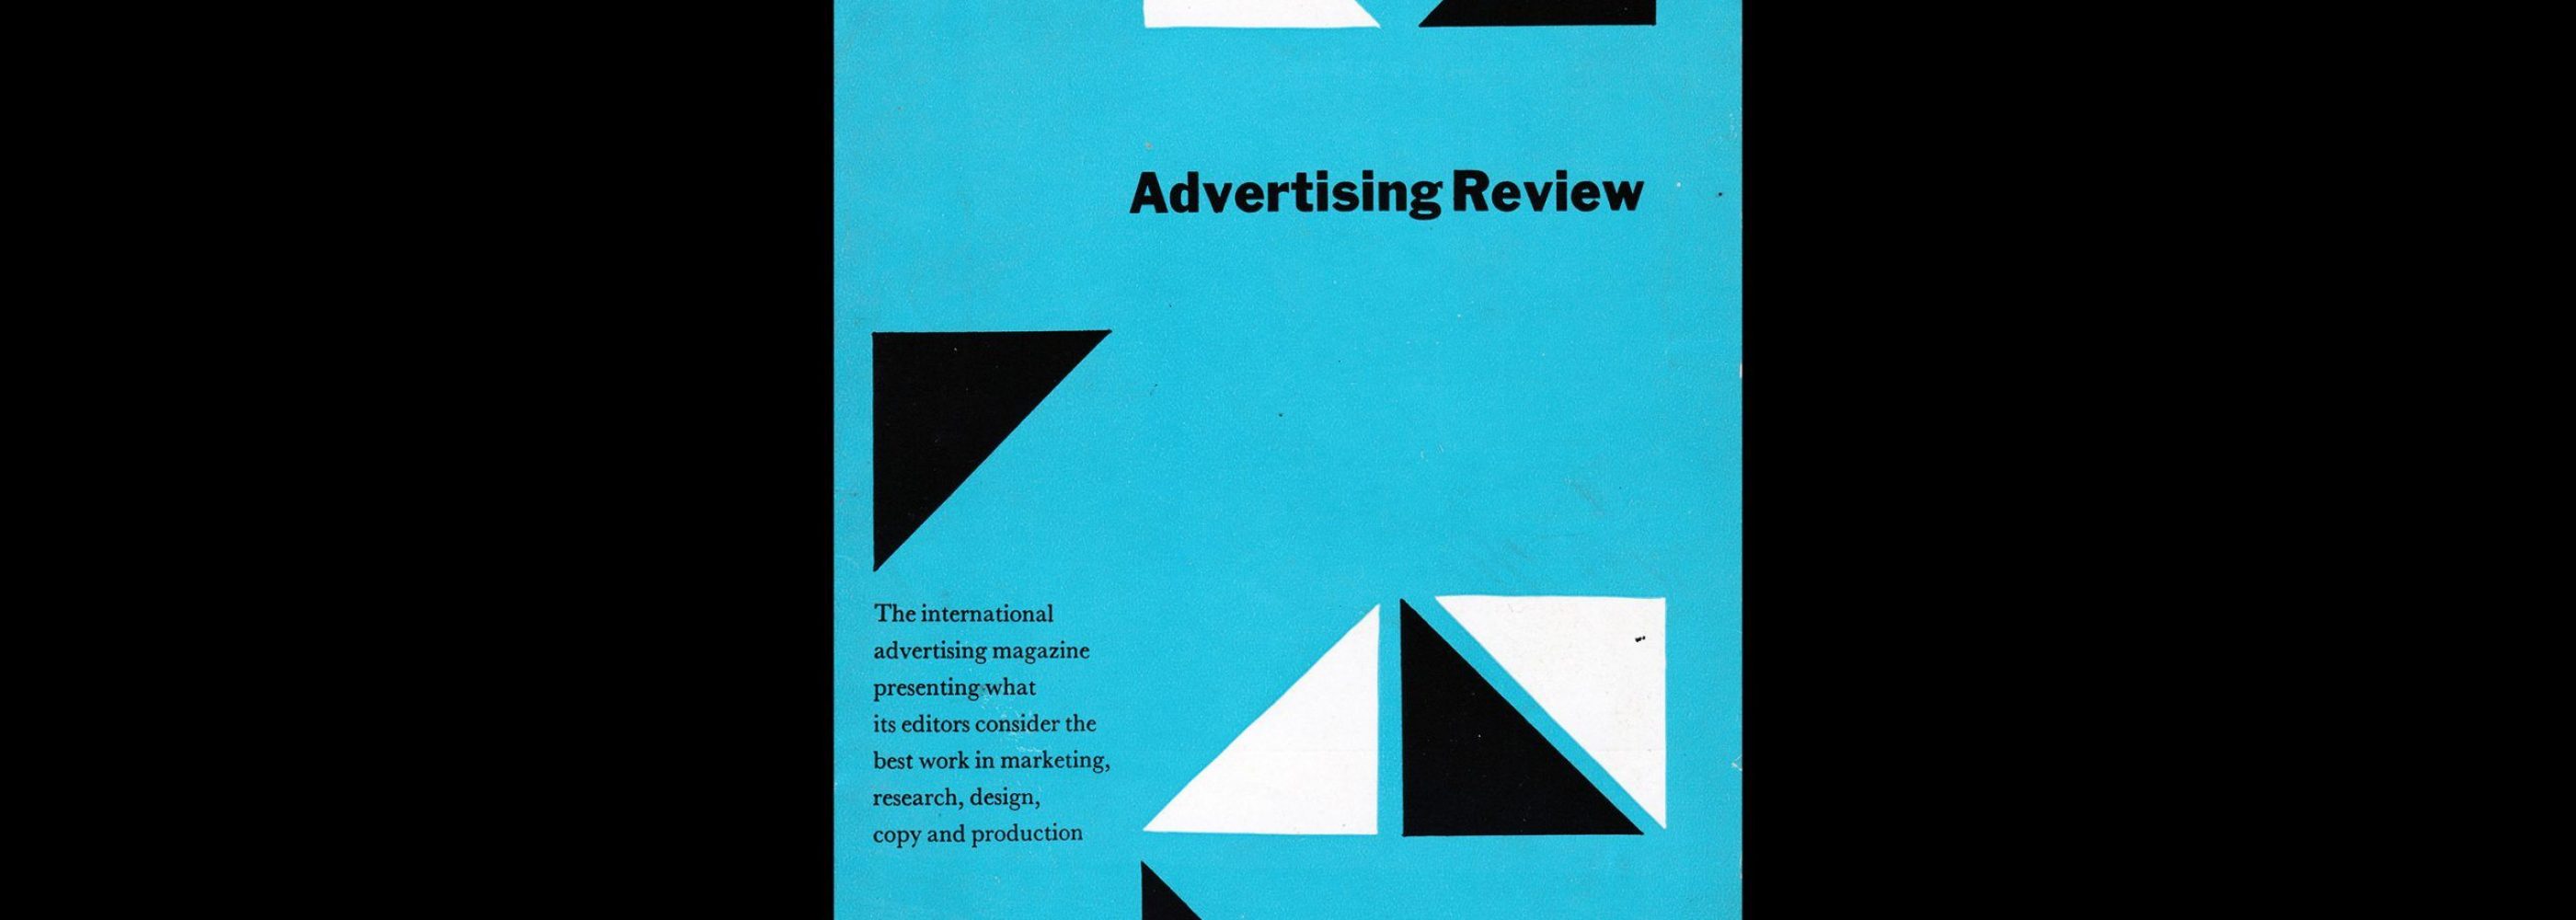 Advertising Review Brochure 1955 - 2